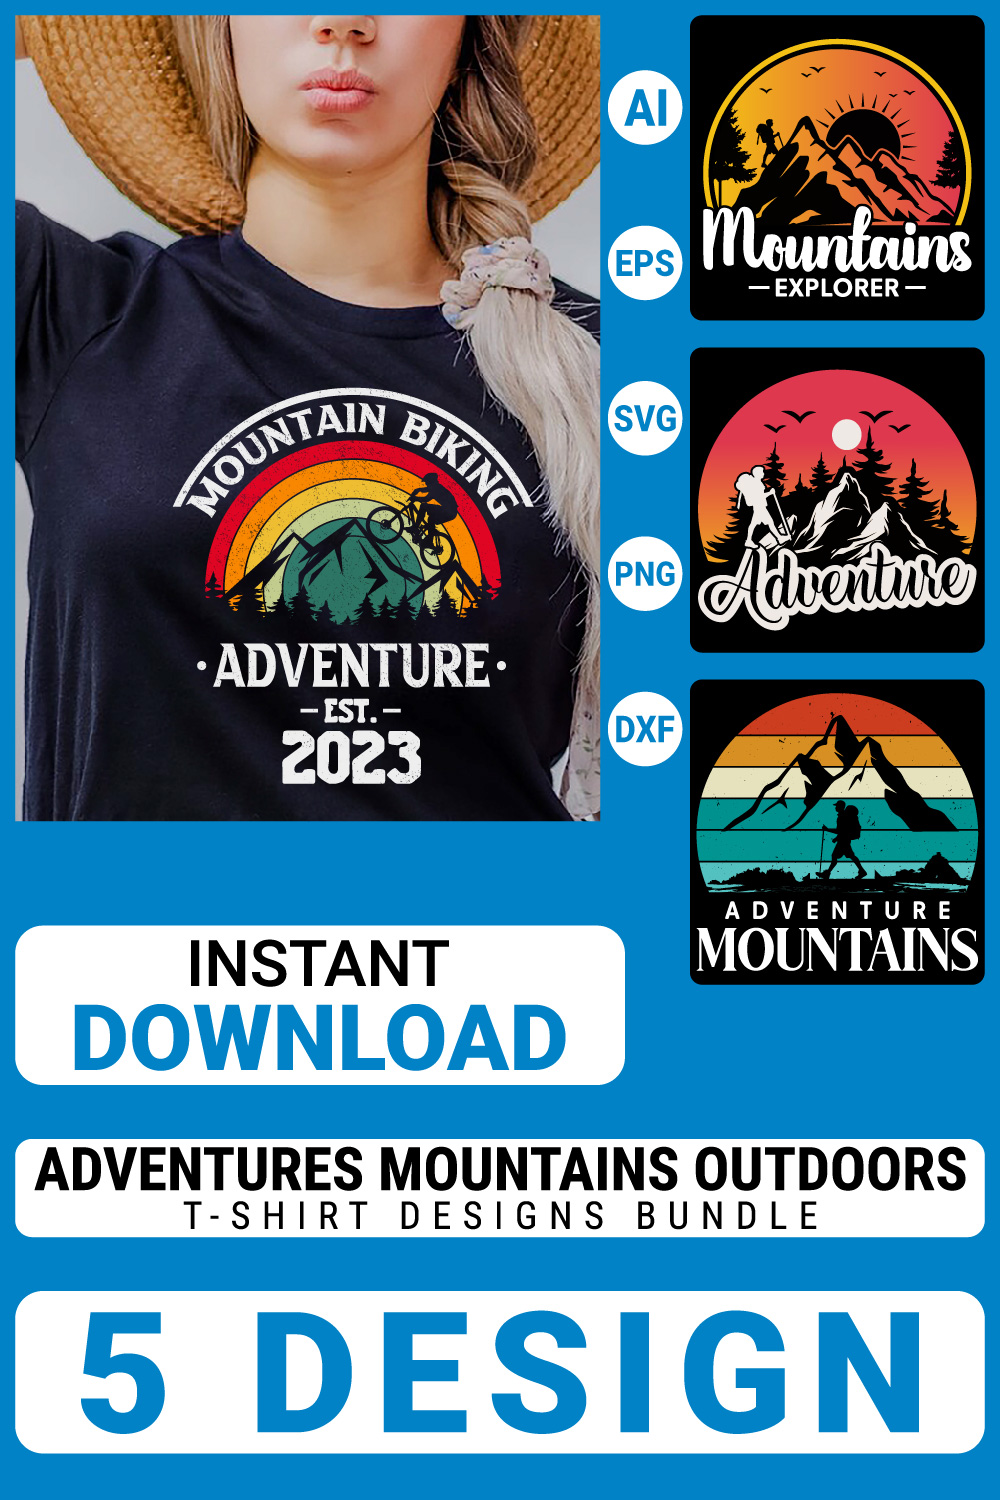 Adventures mountains Outdoors Vector illustration t-shirt design Graphic T-Shirt Design pinterest preview image.